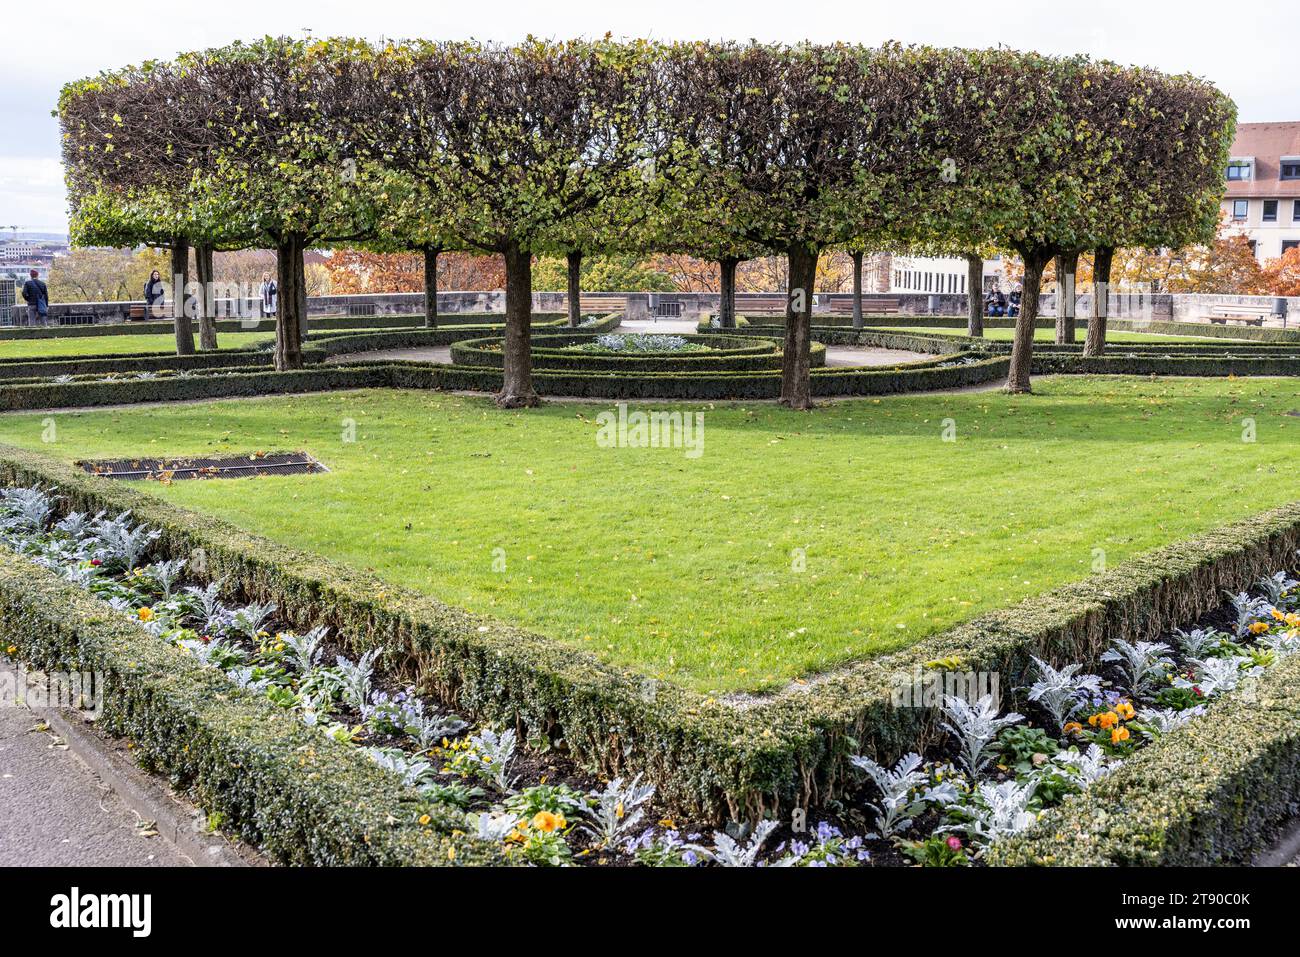 Garden of the Lower Bastion, Kaiserburg, Nuremberg, Germany Stock Photo